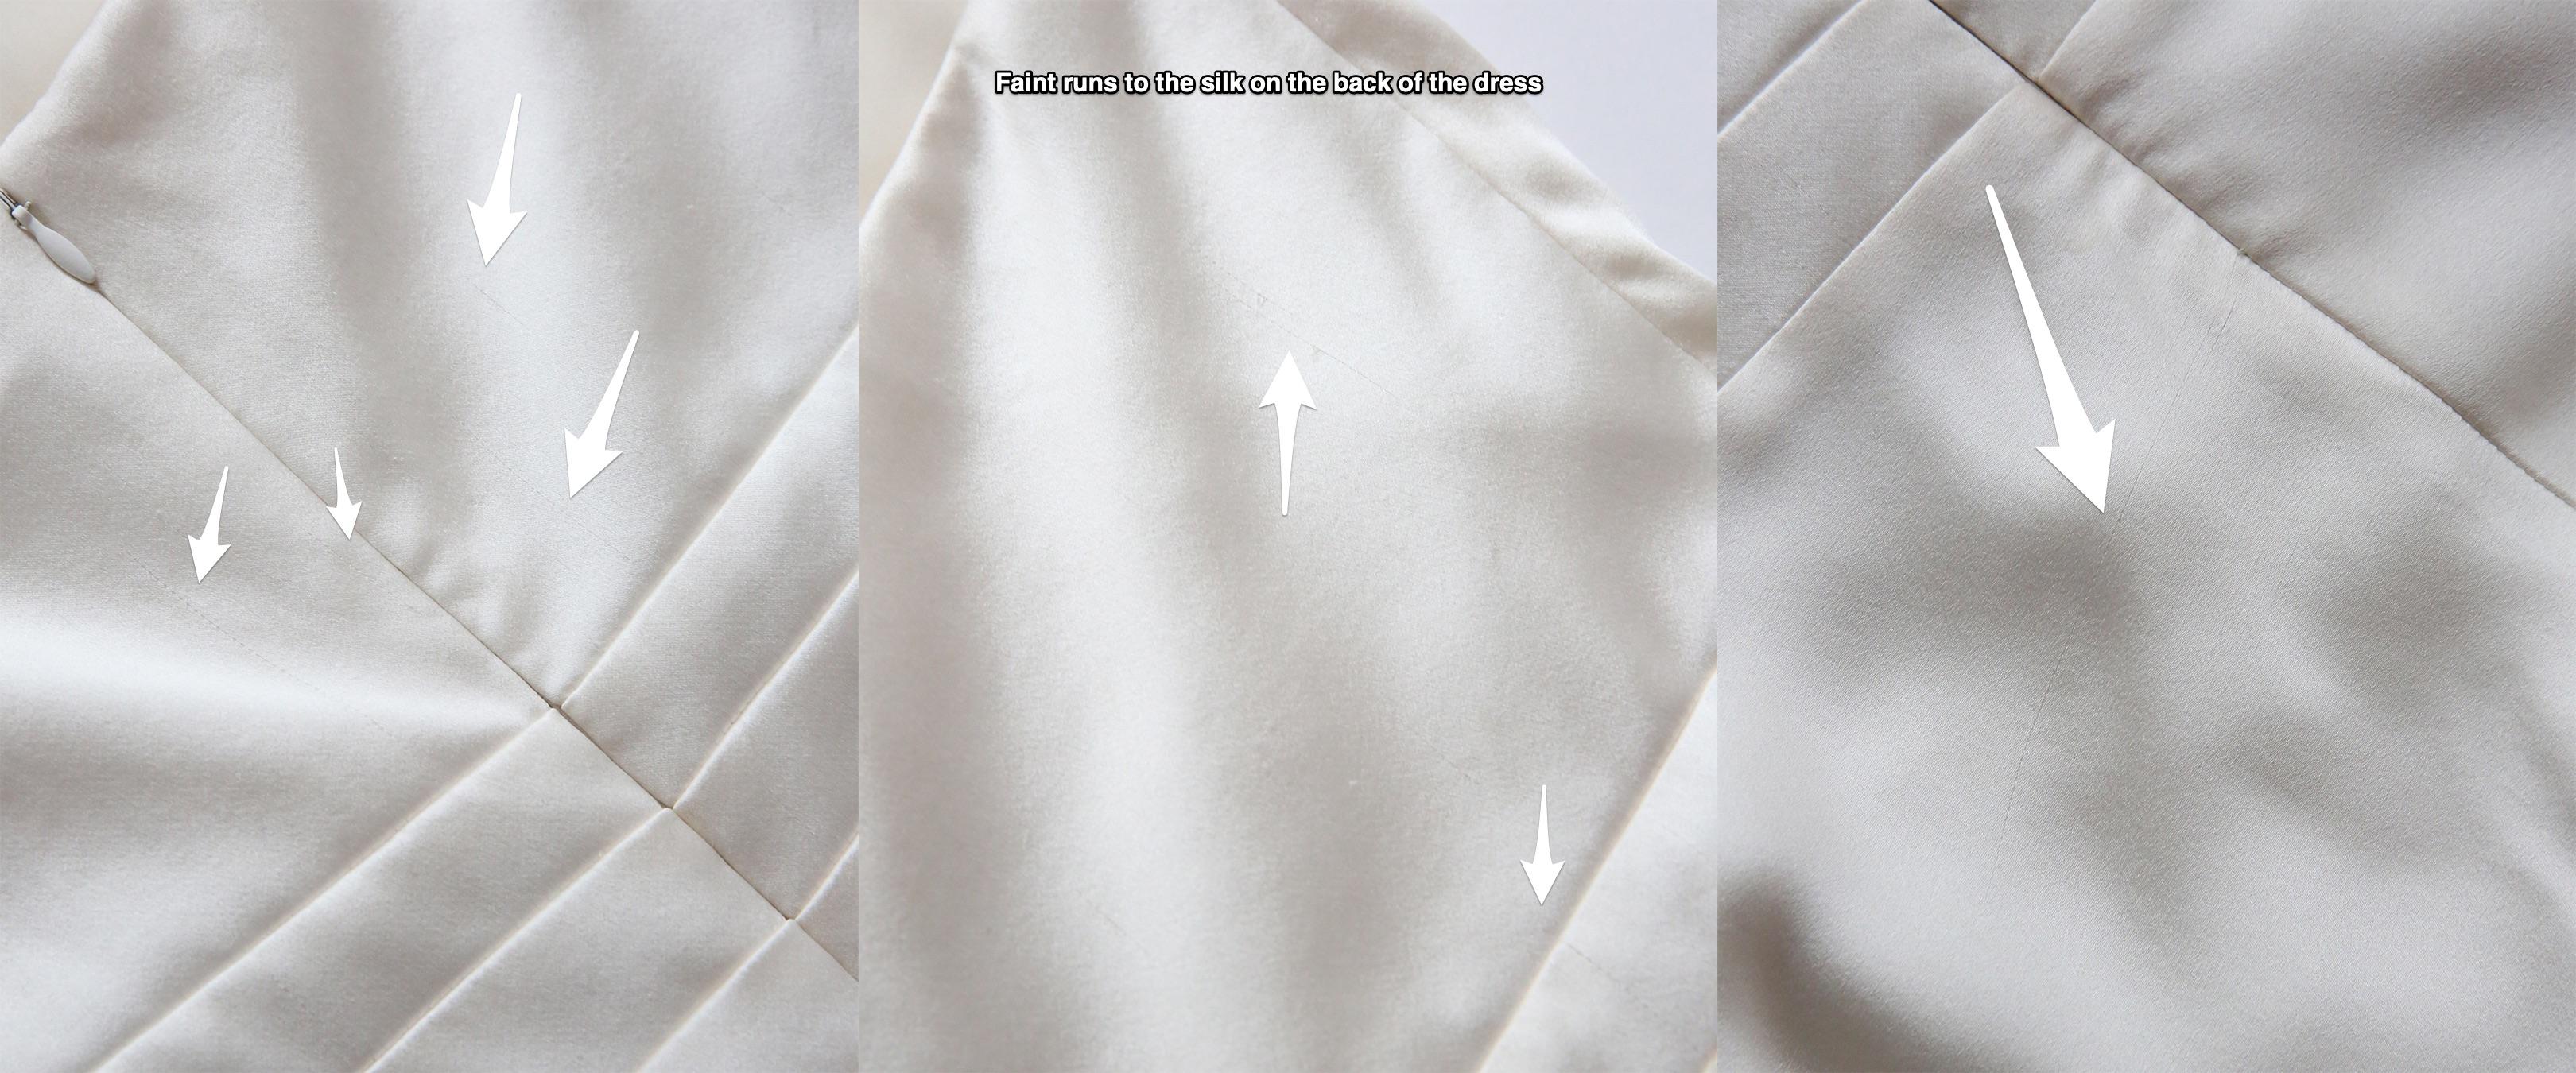 Ralph Lauren S/S 2009 white ivory silk plunging halter neck wedding gown dress For Sale 6